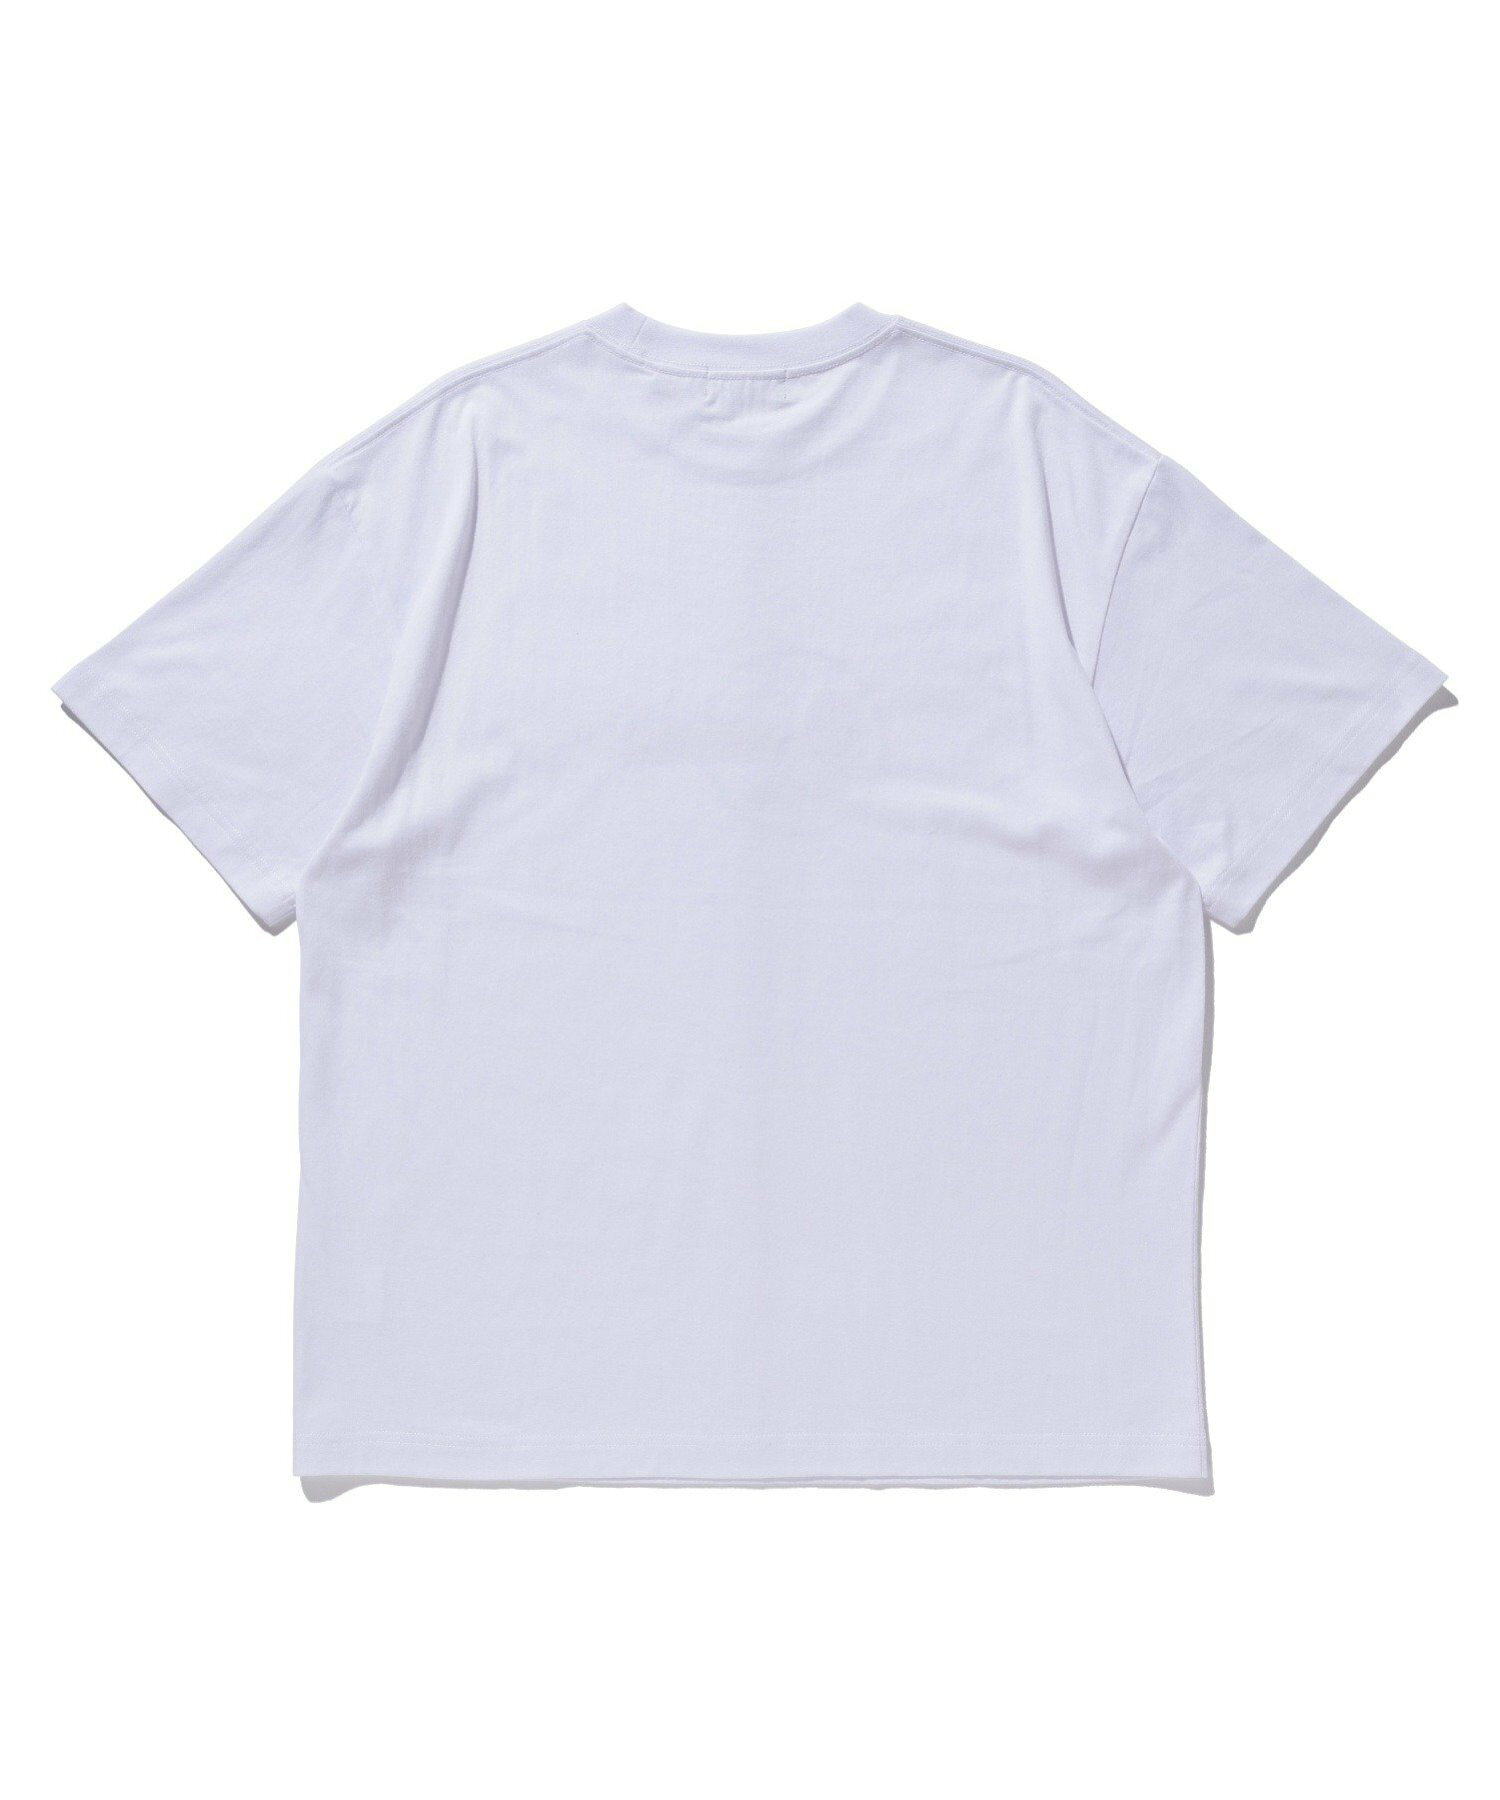 UMA S/S TEE Tシャツ 半袖 XLARGE